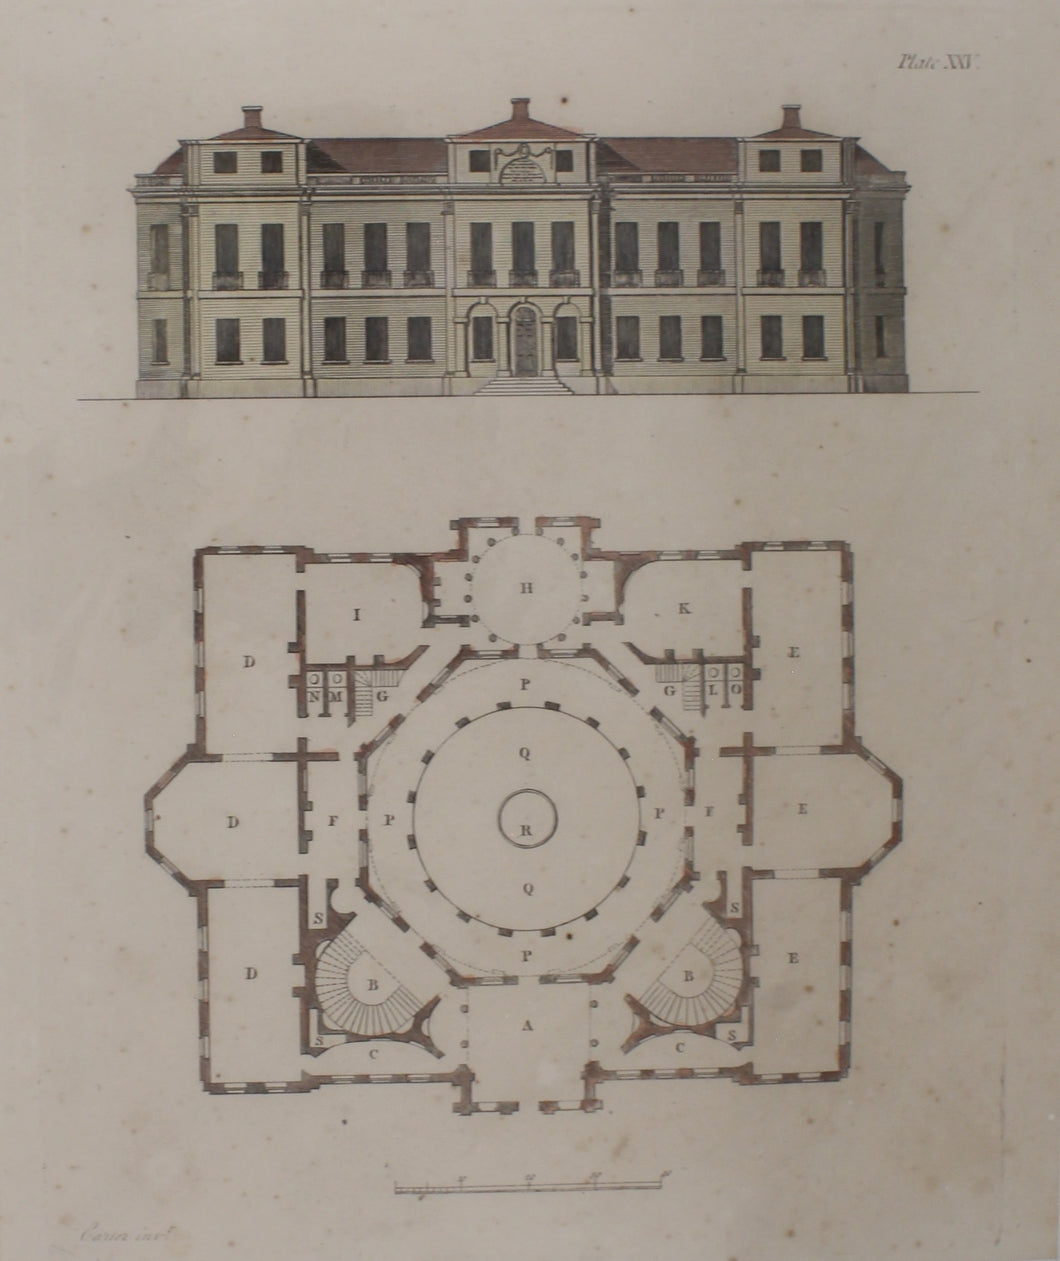 Architecture, Carter, John, Circa 1780,  LXXVI